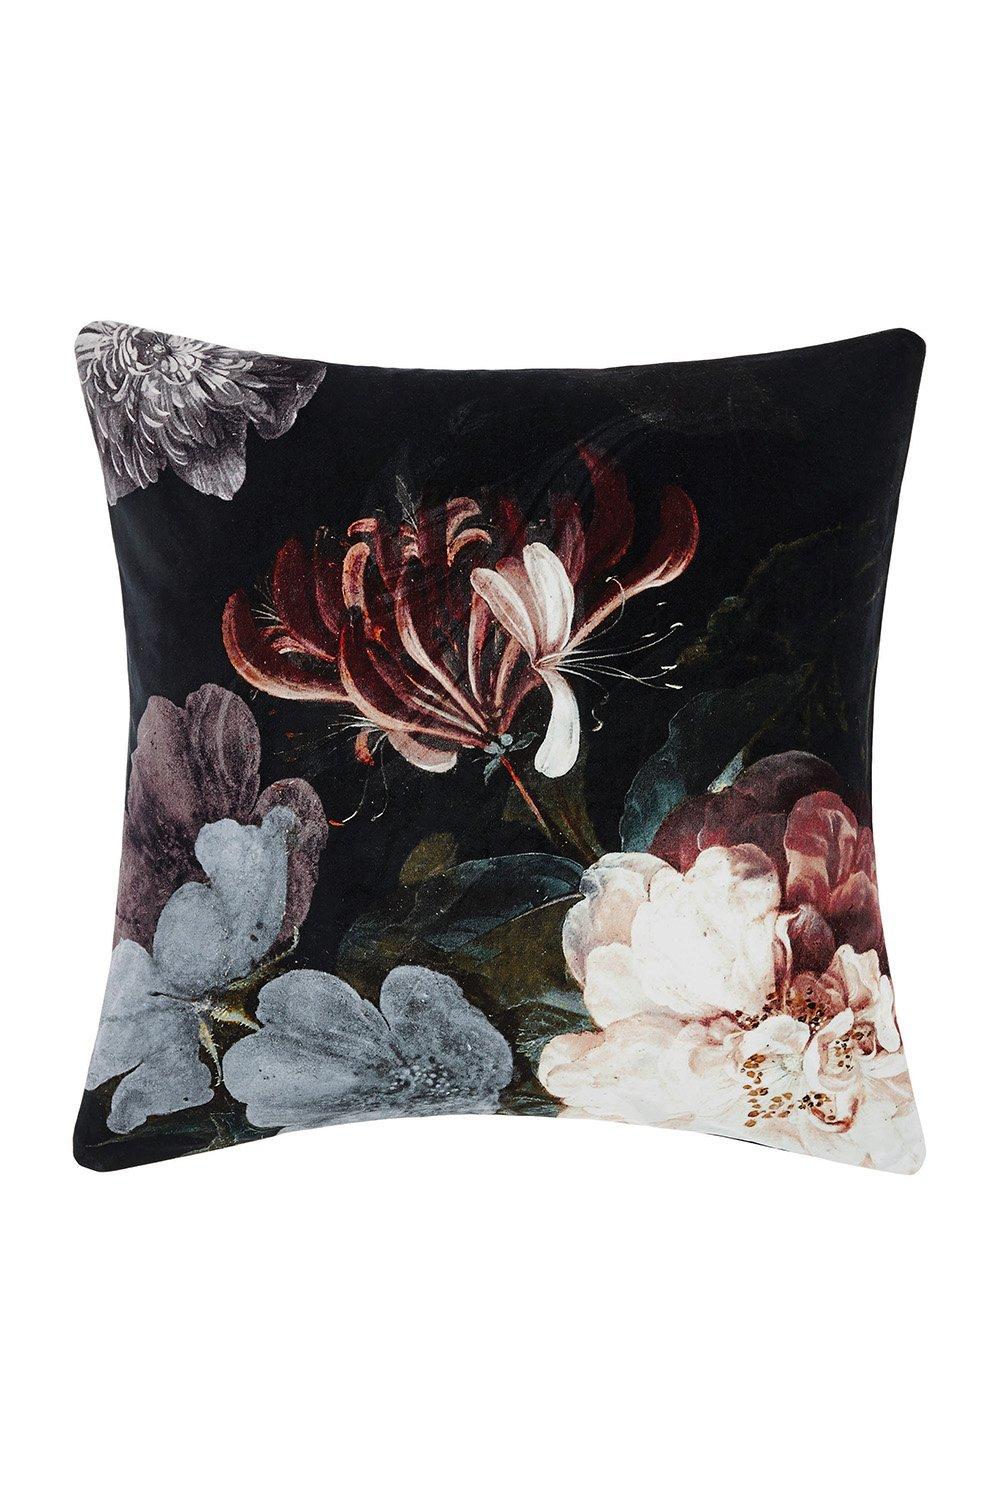 Linen House Winona Dark Botanical Pillowcase Sham